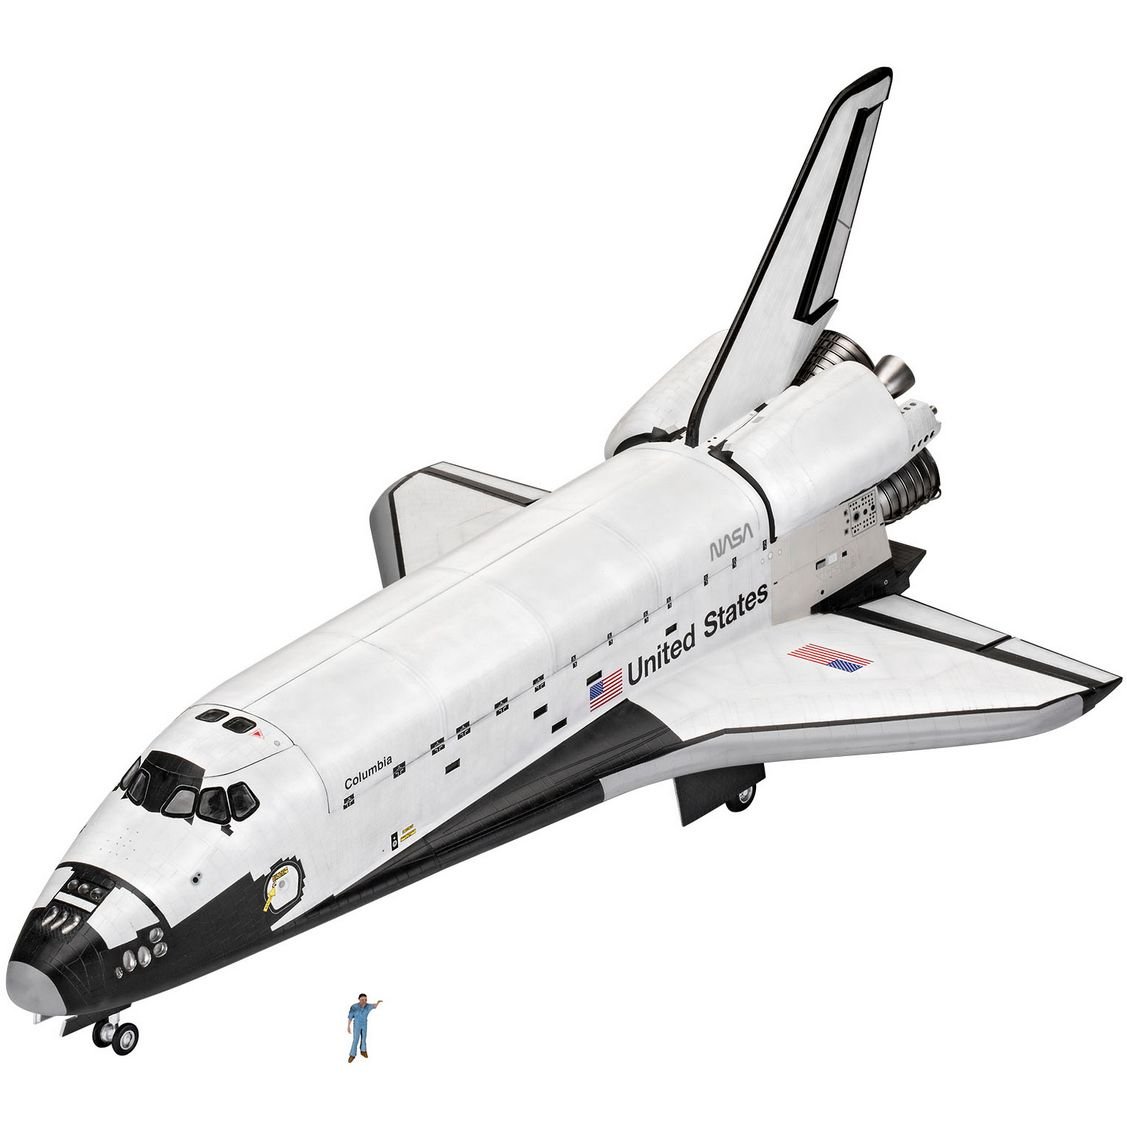 Сборная модель Revell Набор Space Shuttle, уровень 5, масштаб 1:72, 111 деталей (RVL-05673) - фото 3